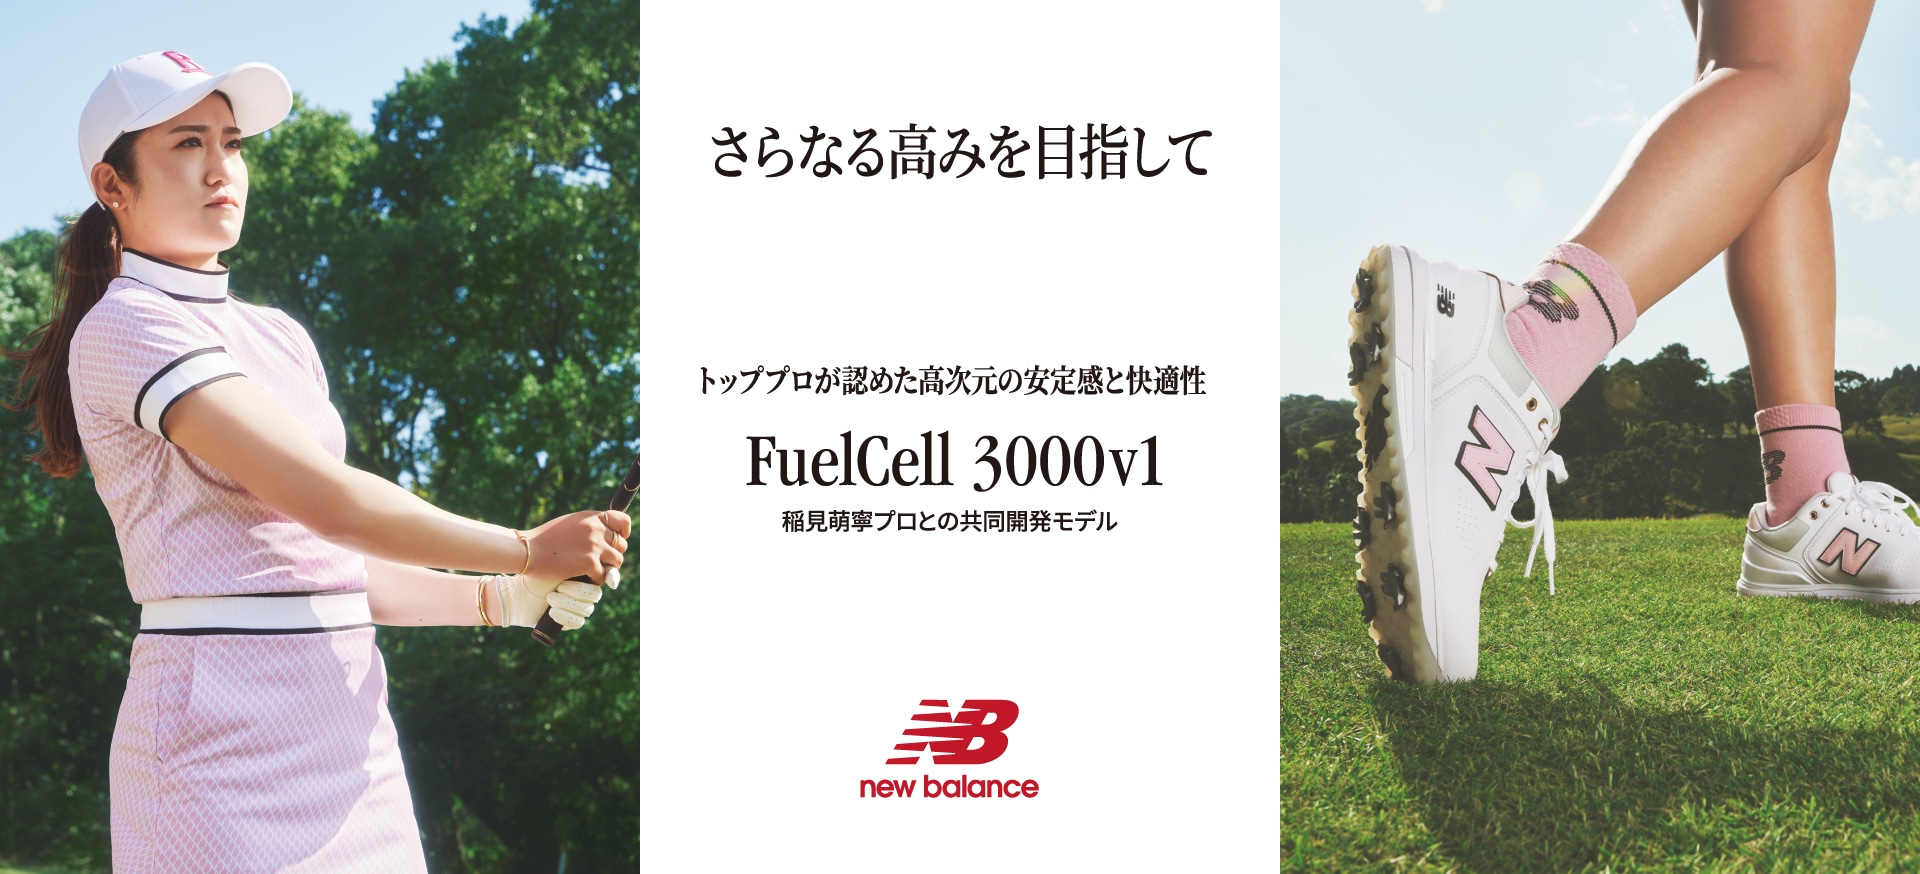 FuelCell 3000v1